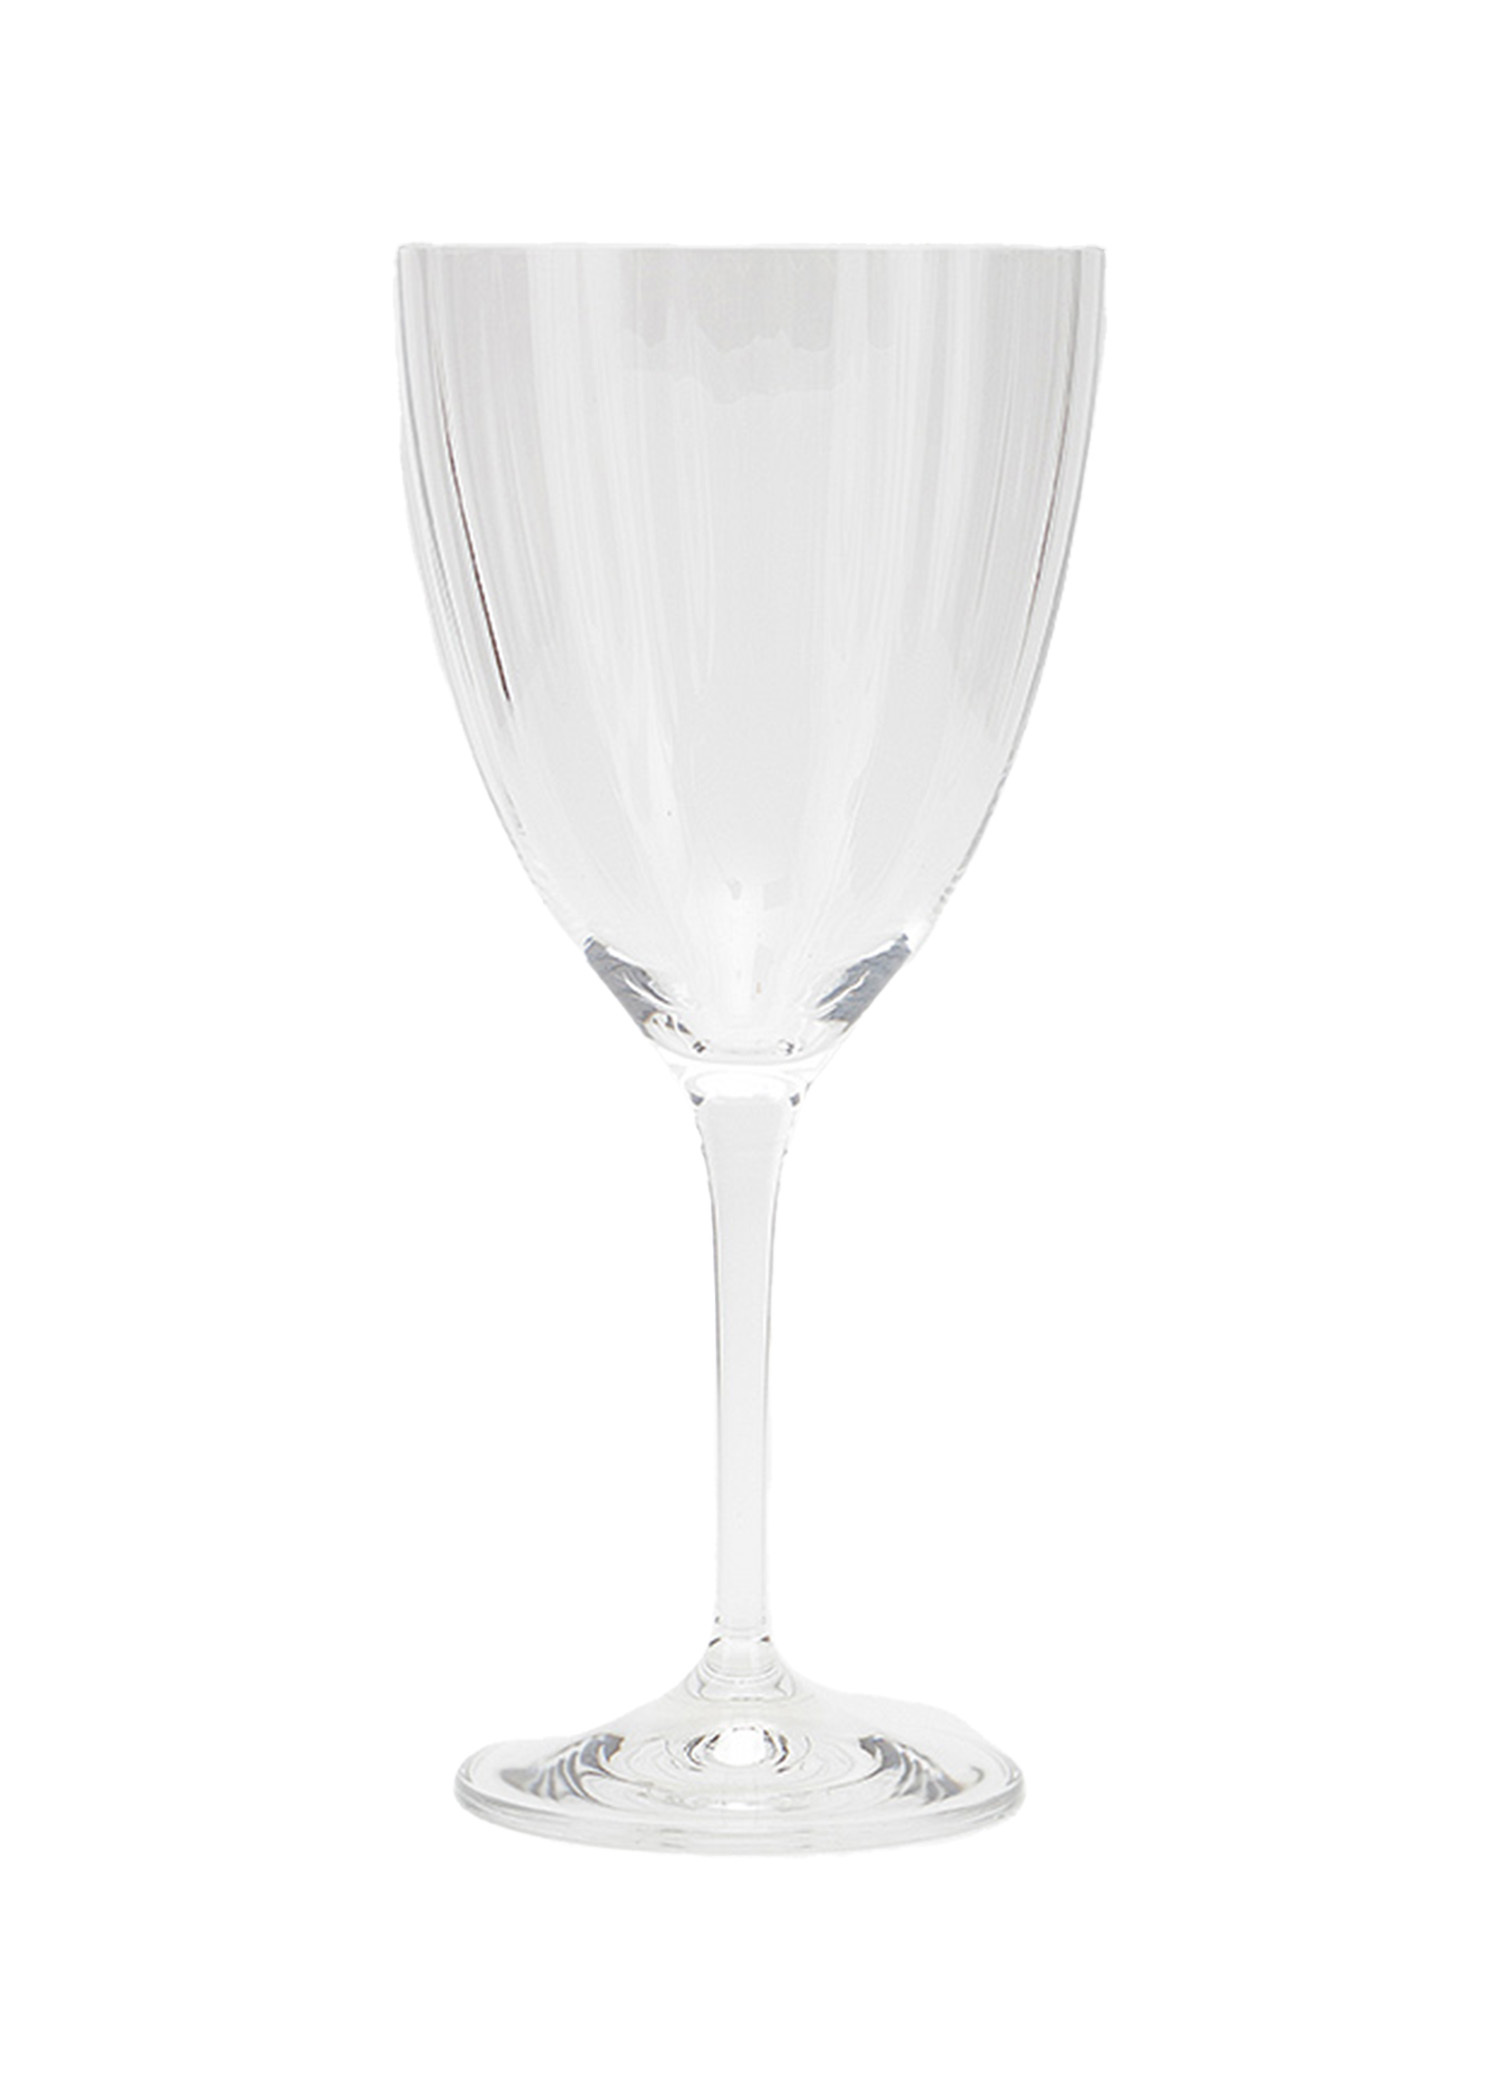 Weinglas mit Wellentextur Image 0